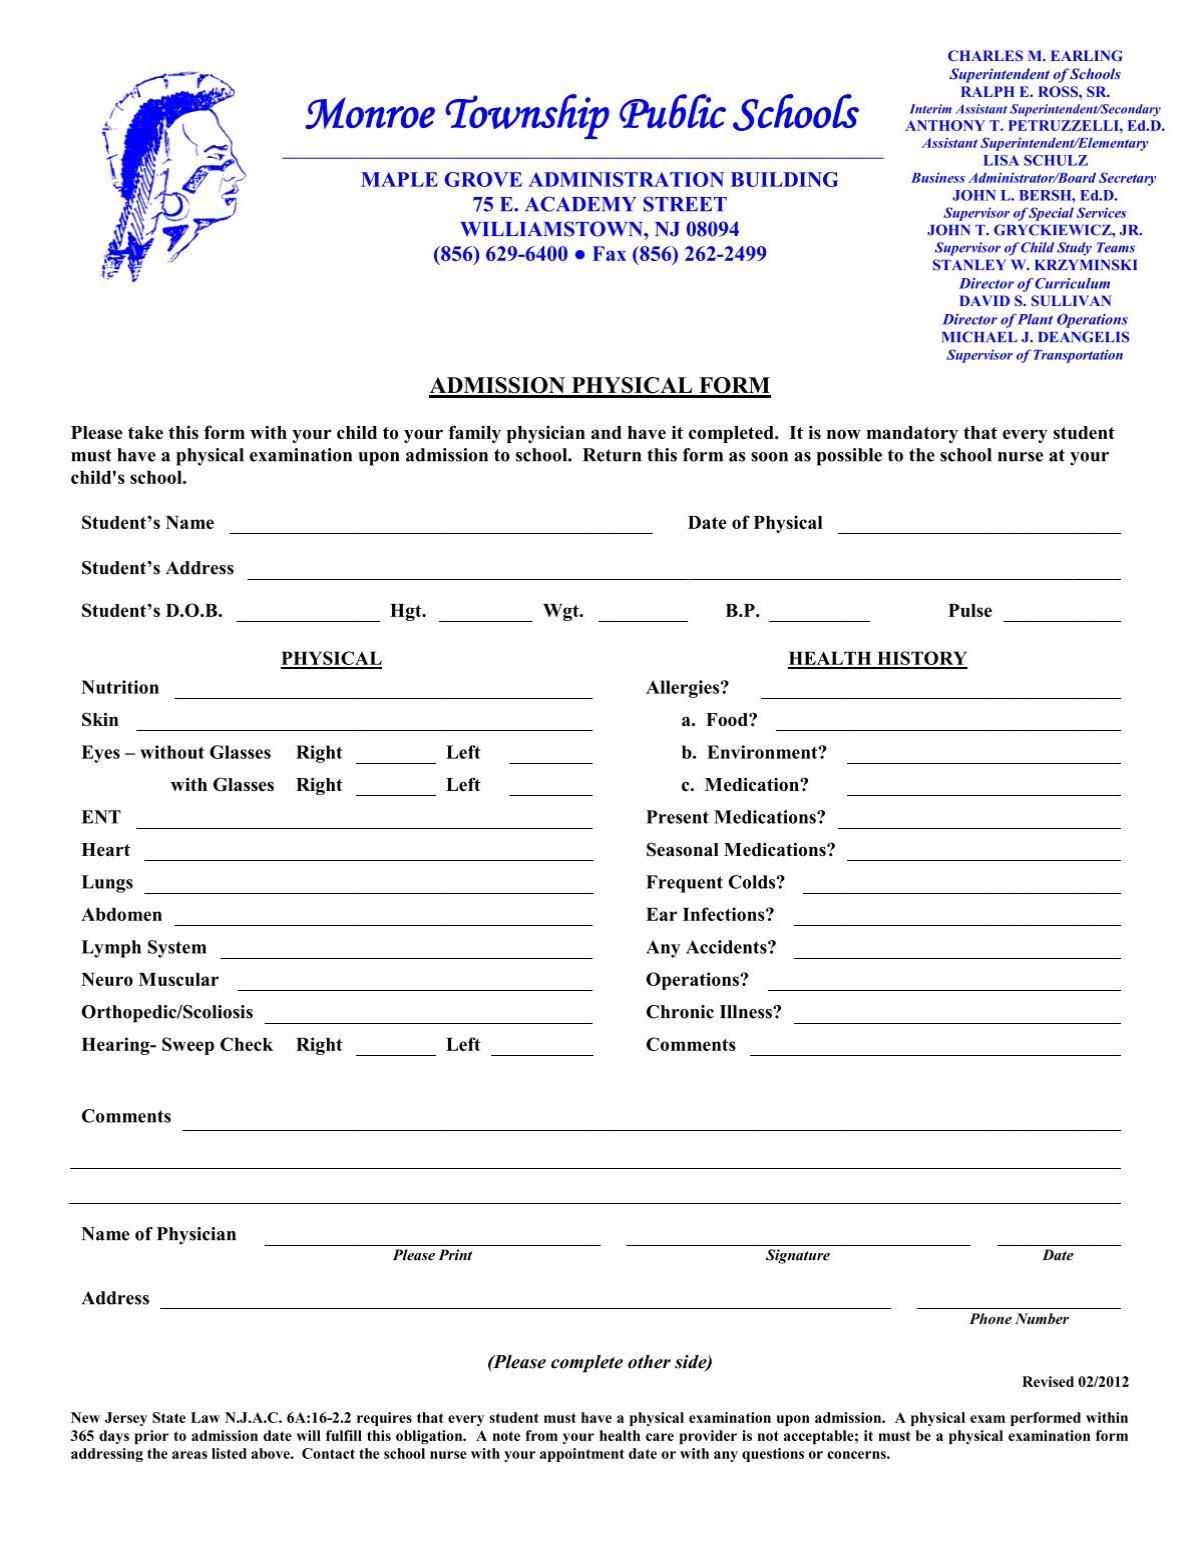 Admission Physical Form Monroe Township Public Schools